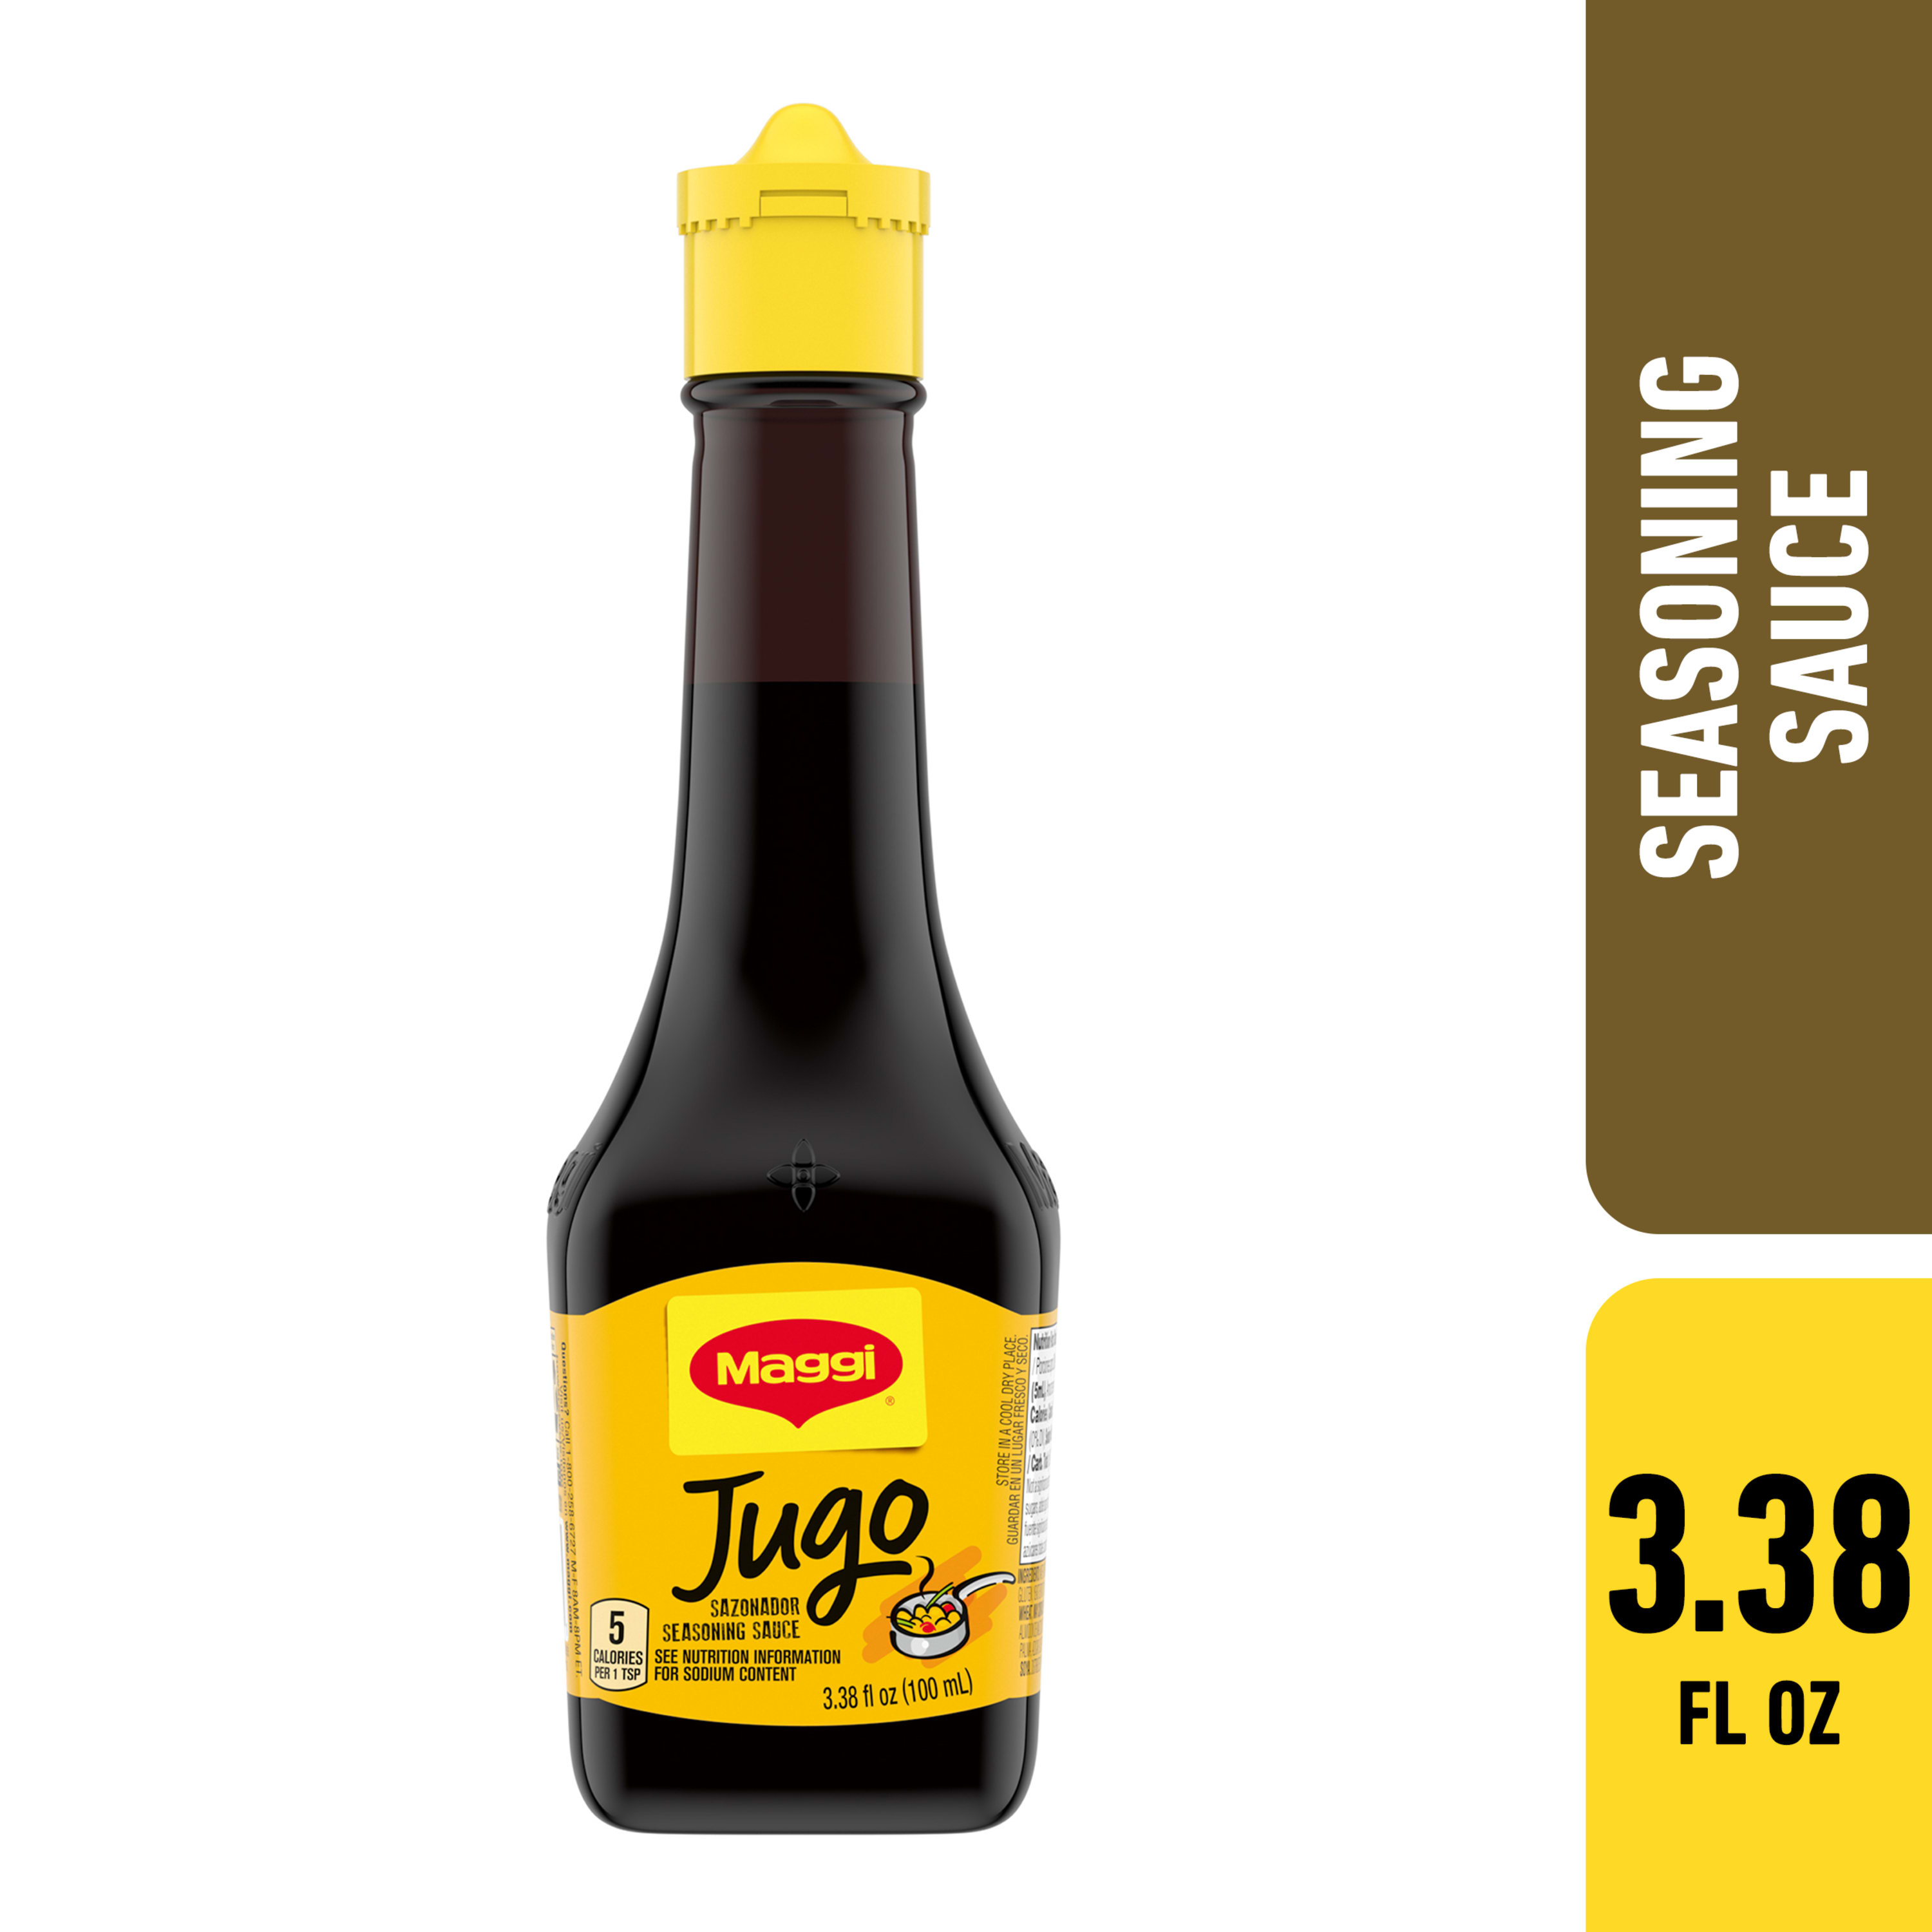 Maggi Five Calorie Jugo Seasoning Sauce Latin Flavor, 3.38 fl oz - image 1 of 11